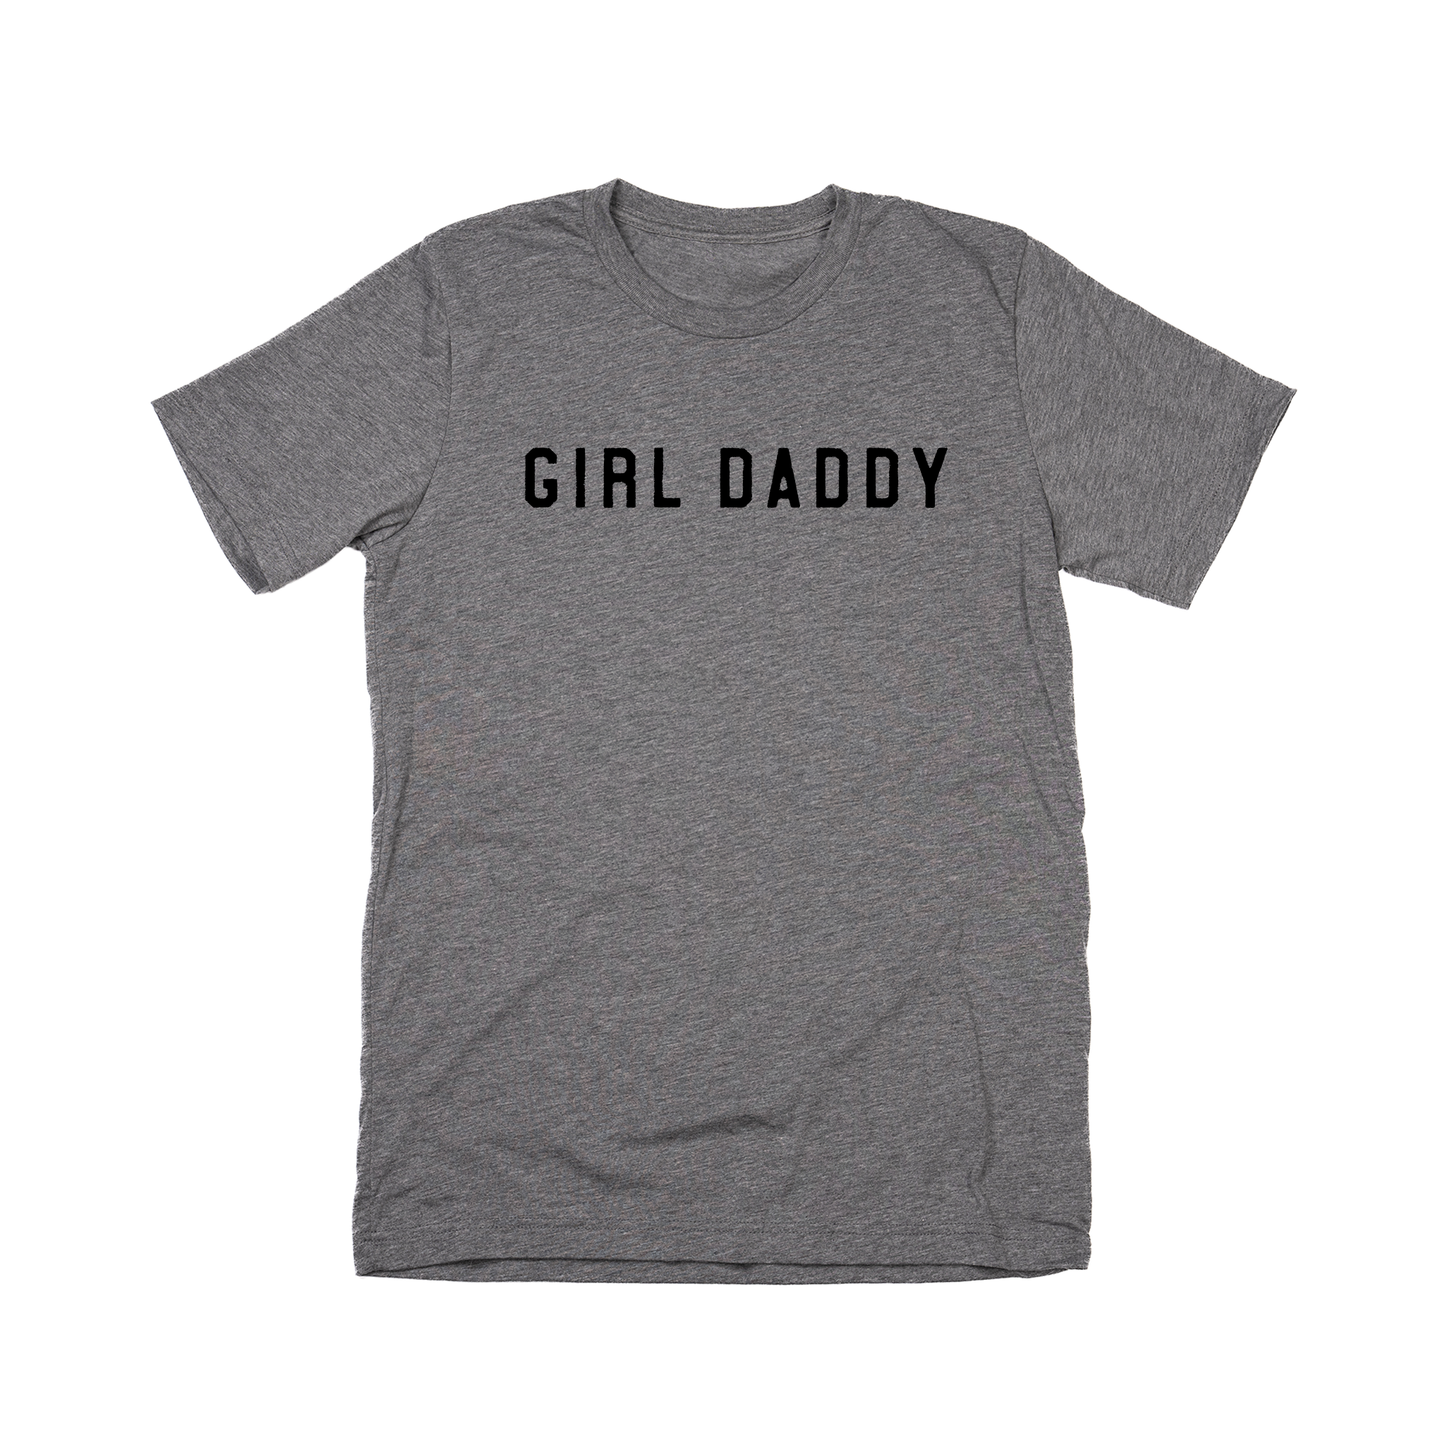 Girl Daddy (Black) - Tee (Gray)